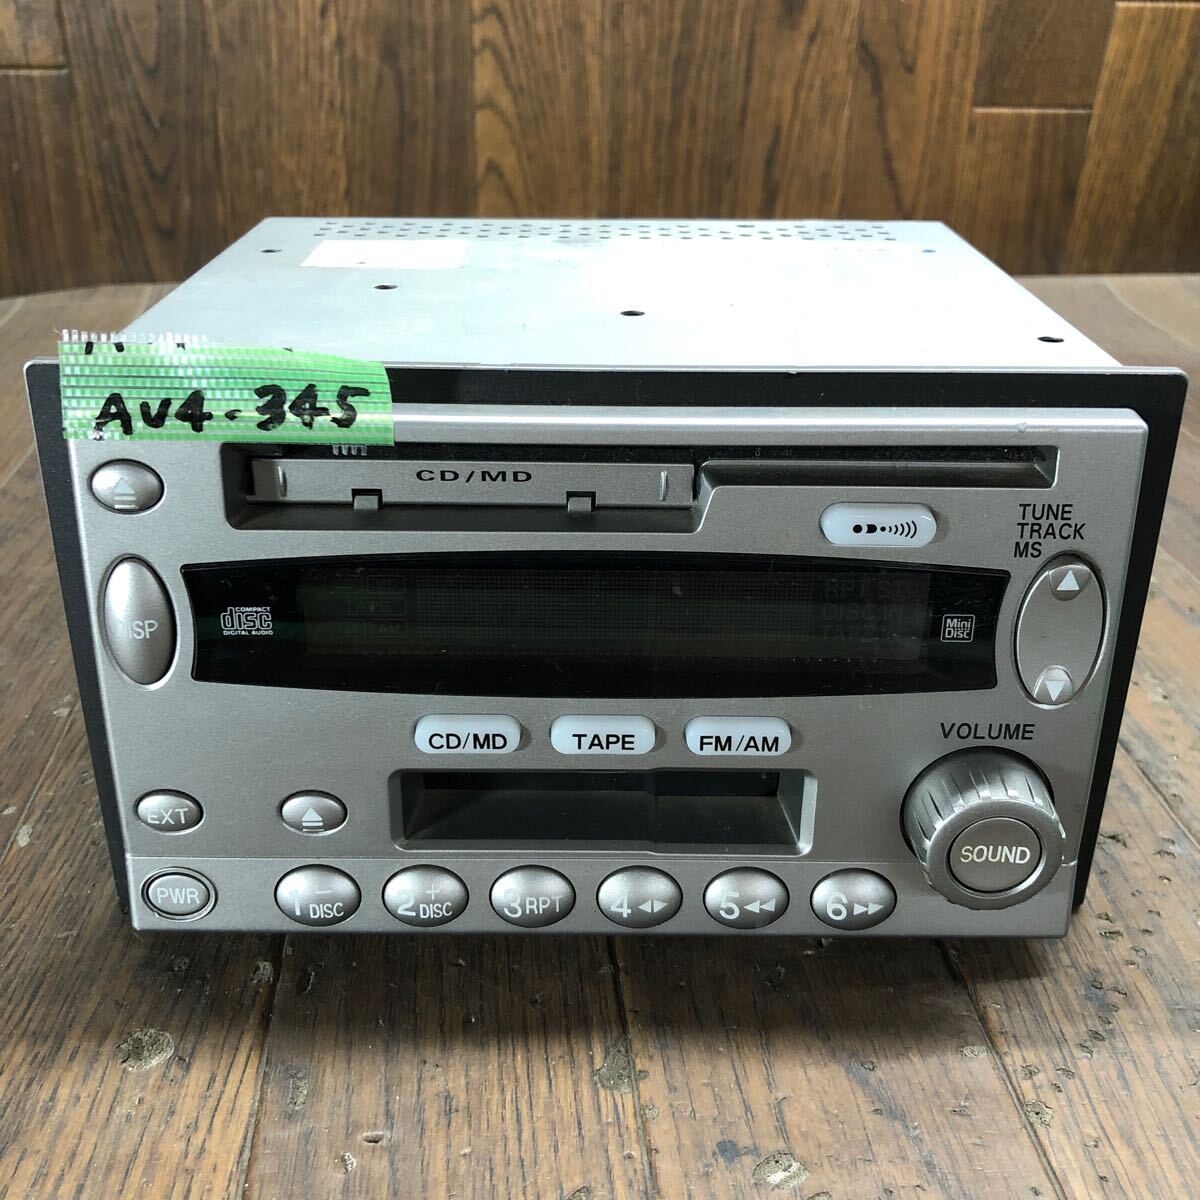 AV4-345 супер-скидка машина стерео SUZUKI 39101-78A90 875950123274 CD MD кассетная магнитола ресивер электризация не проверка Junk 